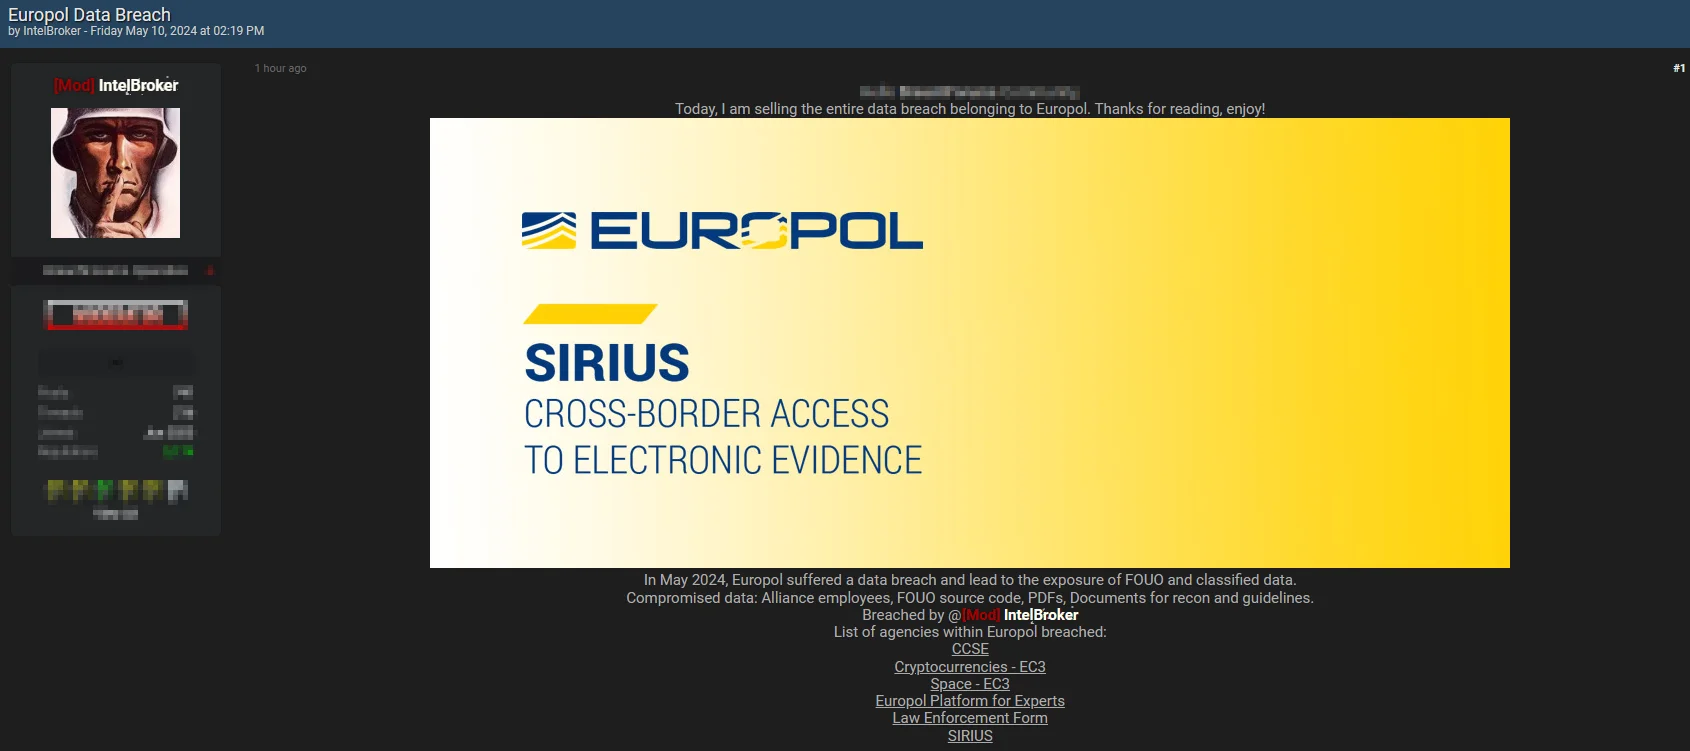 Europol data breach post by the threat actor